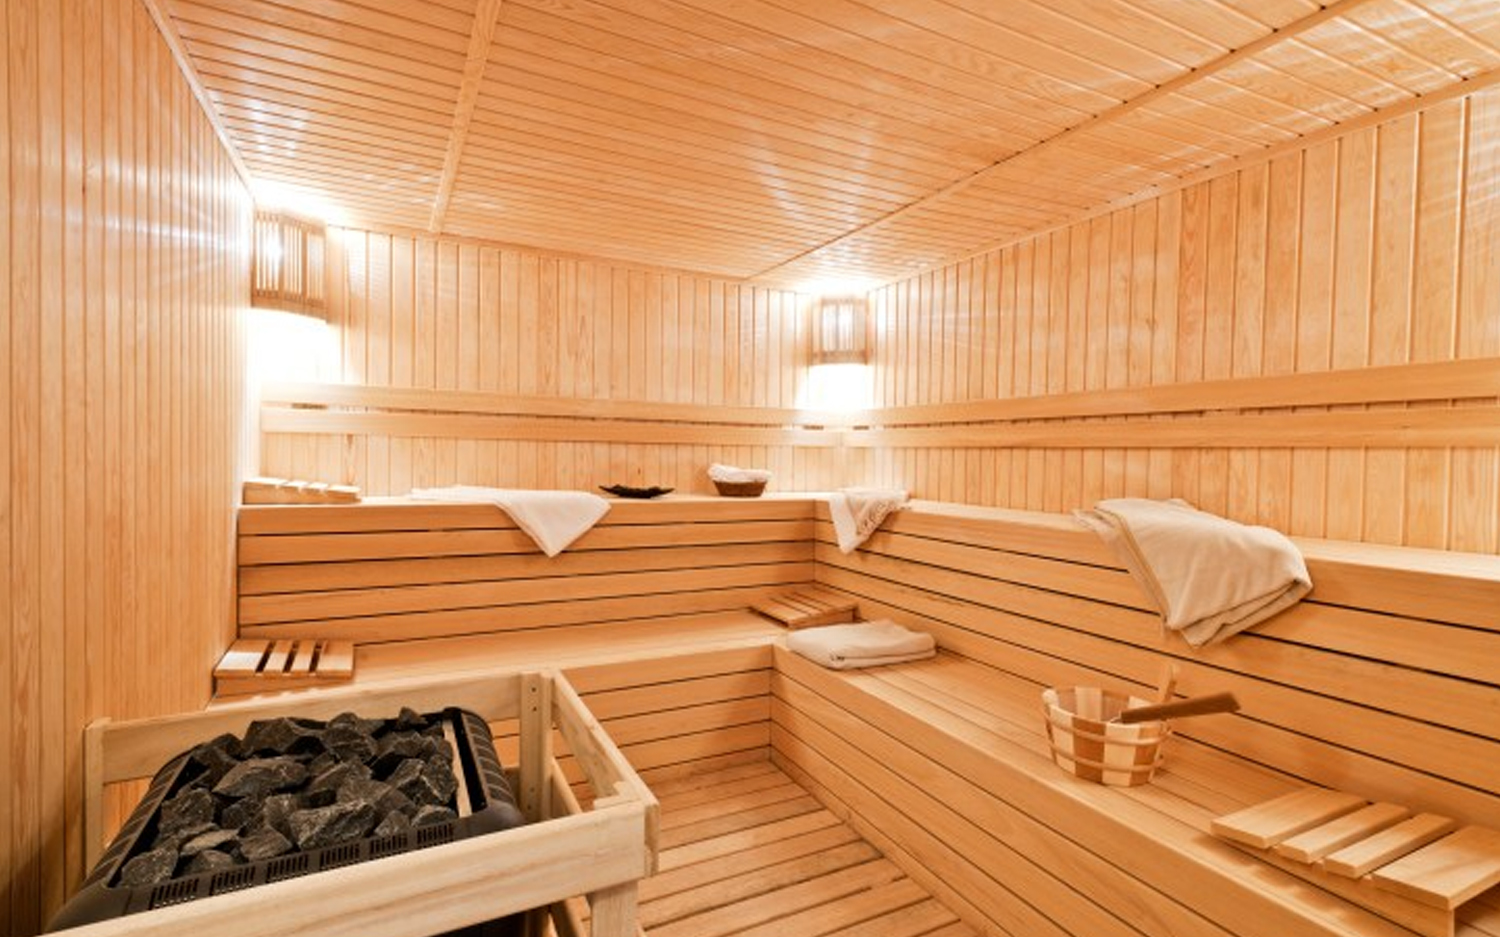 Steam room or dry sauna фото 51